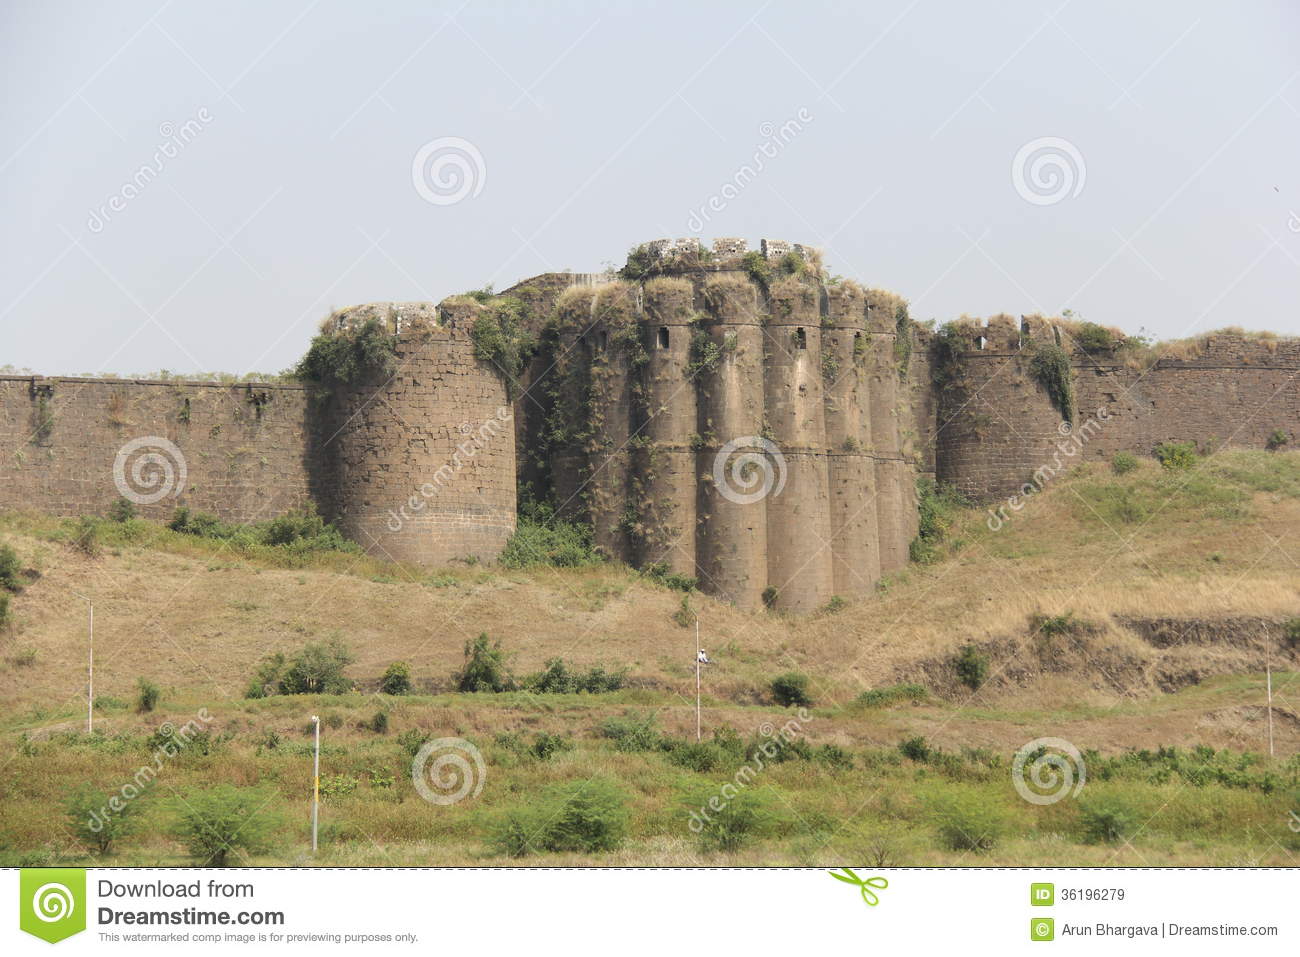 naldurg-fort-nine-port-bastion-bastions-historical-osmanabad-india-36196279.jpg